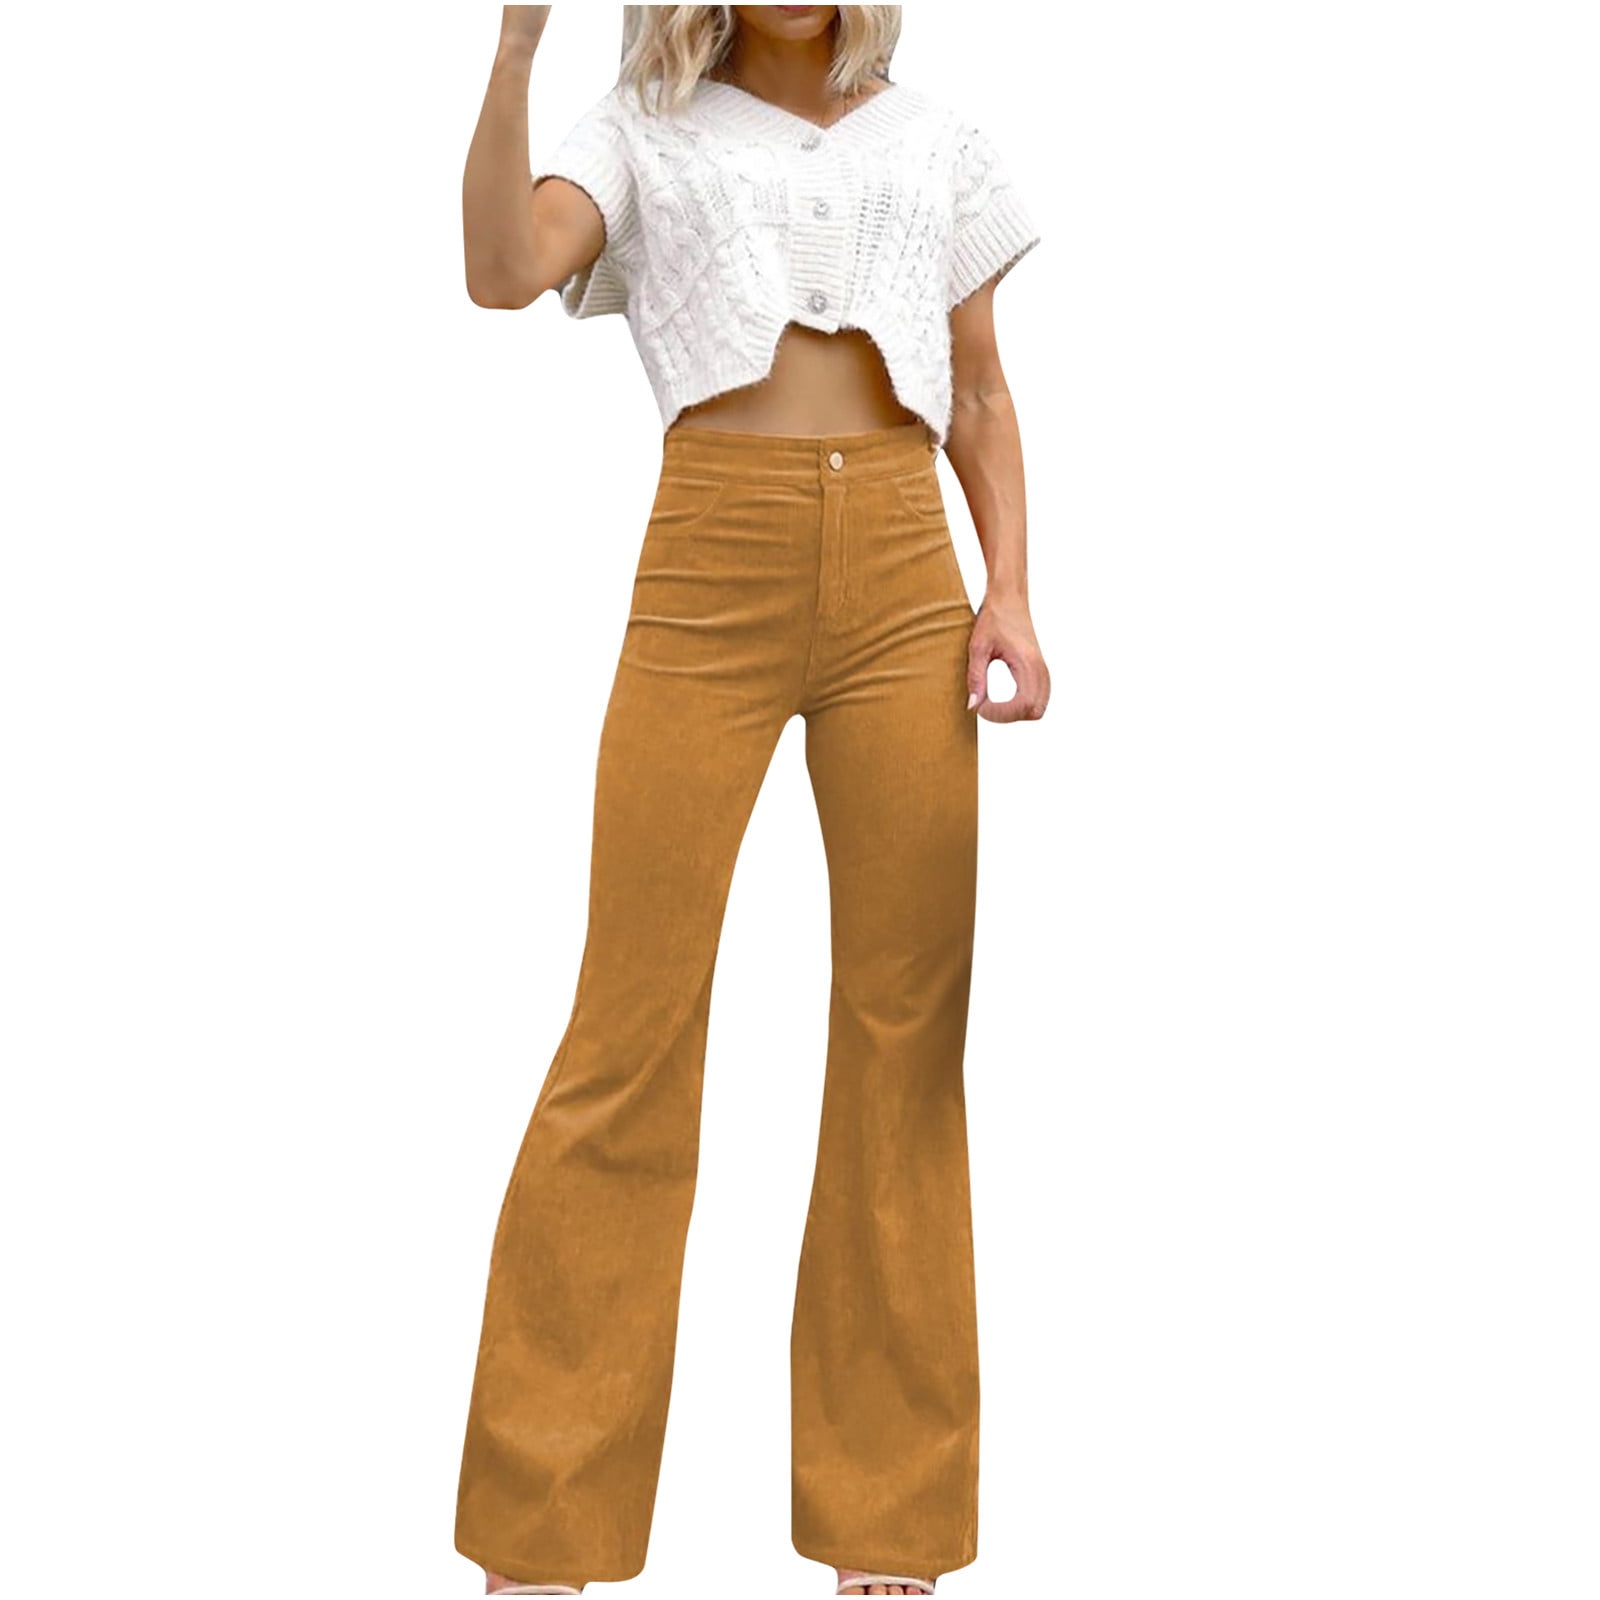 Hfyihgf Women Elegant Corduroy Flare Pants Elastic High Waist Vintage Bell  Bottom Trousers with Pockets(Orange,L)